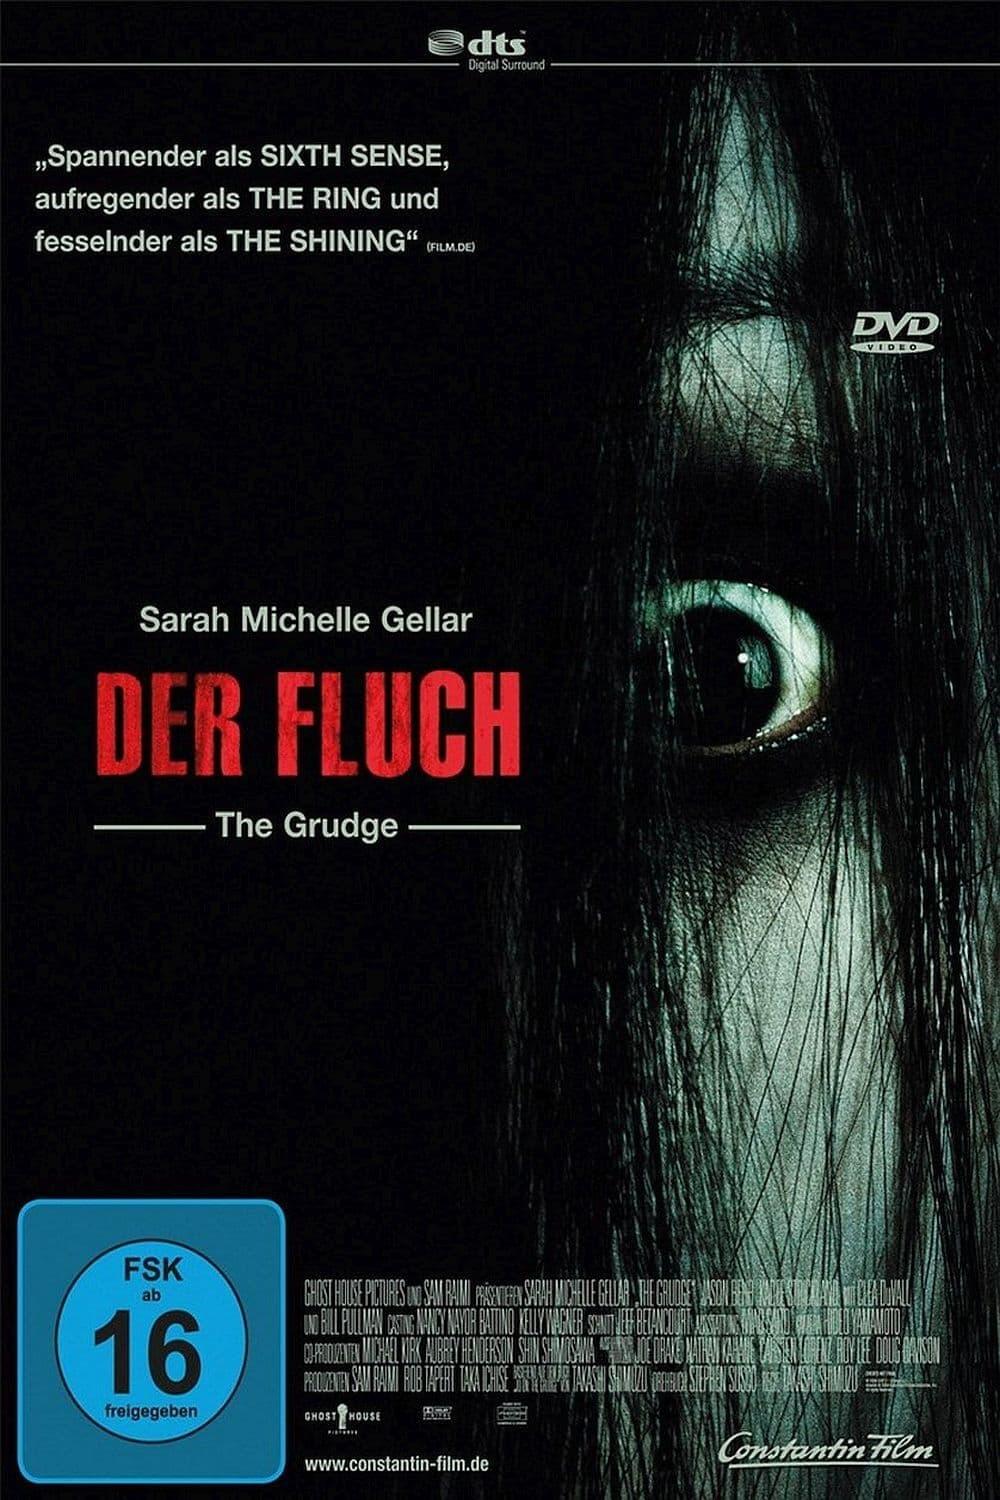 Der Fluch - The Grudge poster